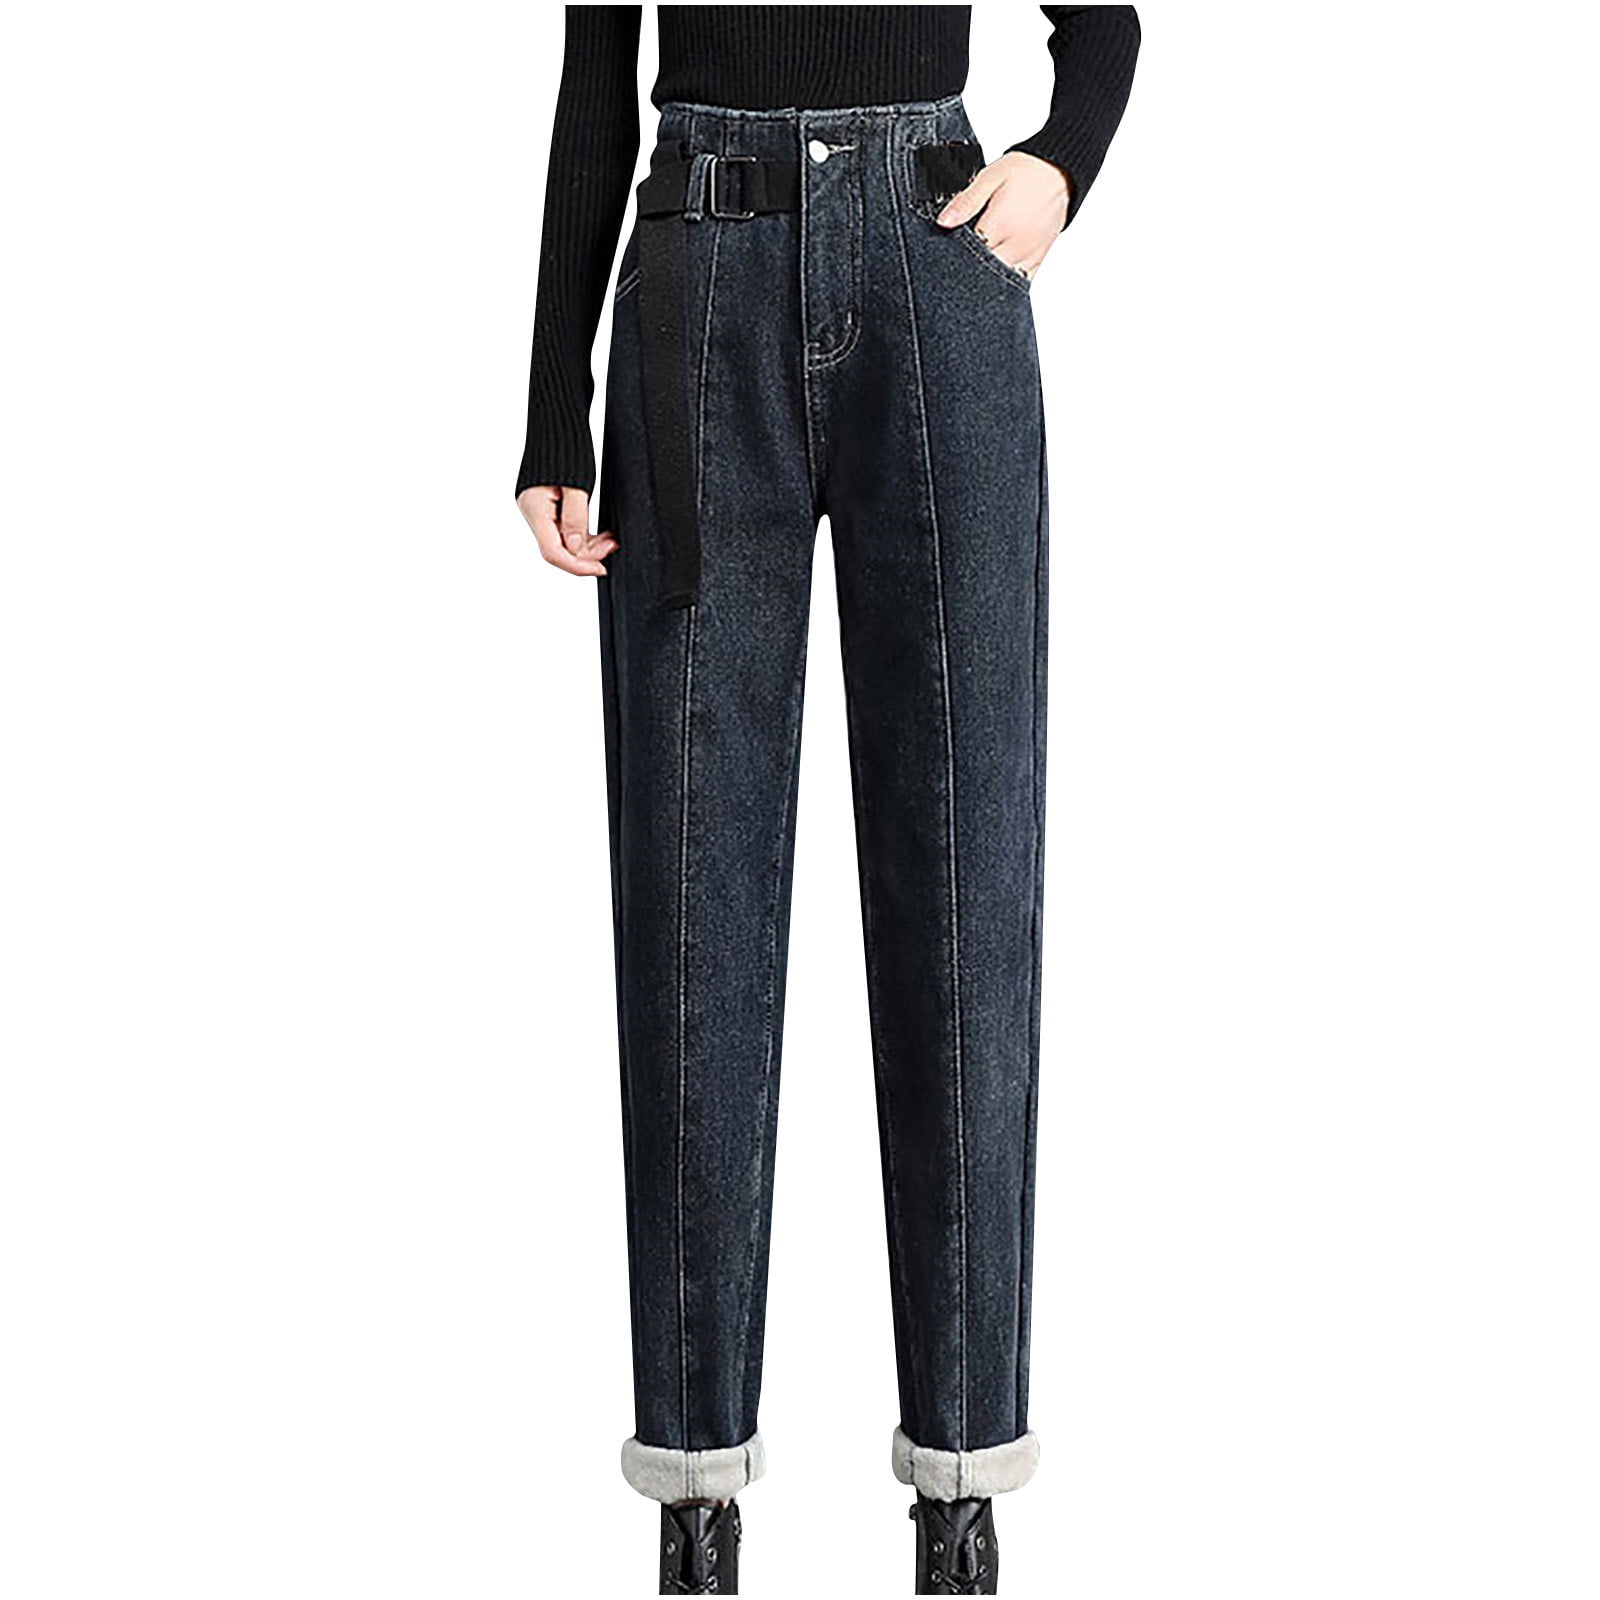 Men's winter thick Thermal jeans fleece lined Denim Pants cotton Warm  Trousers